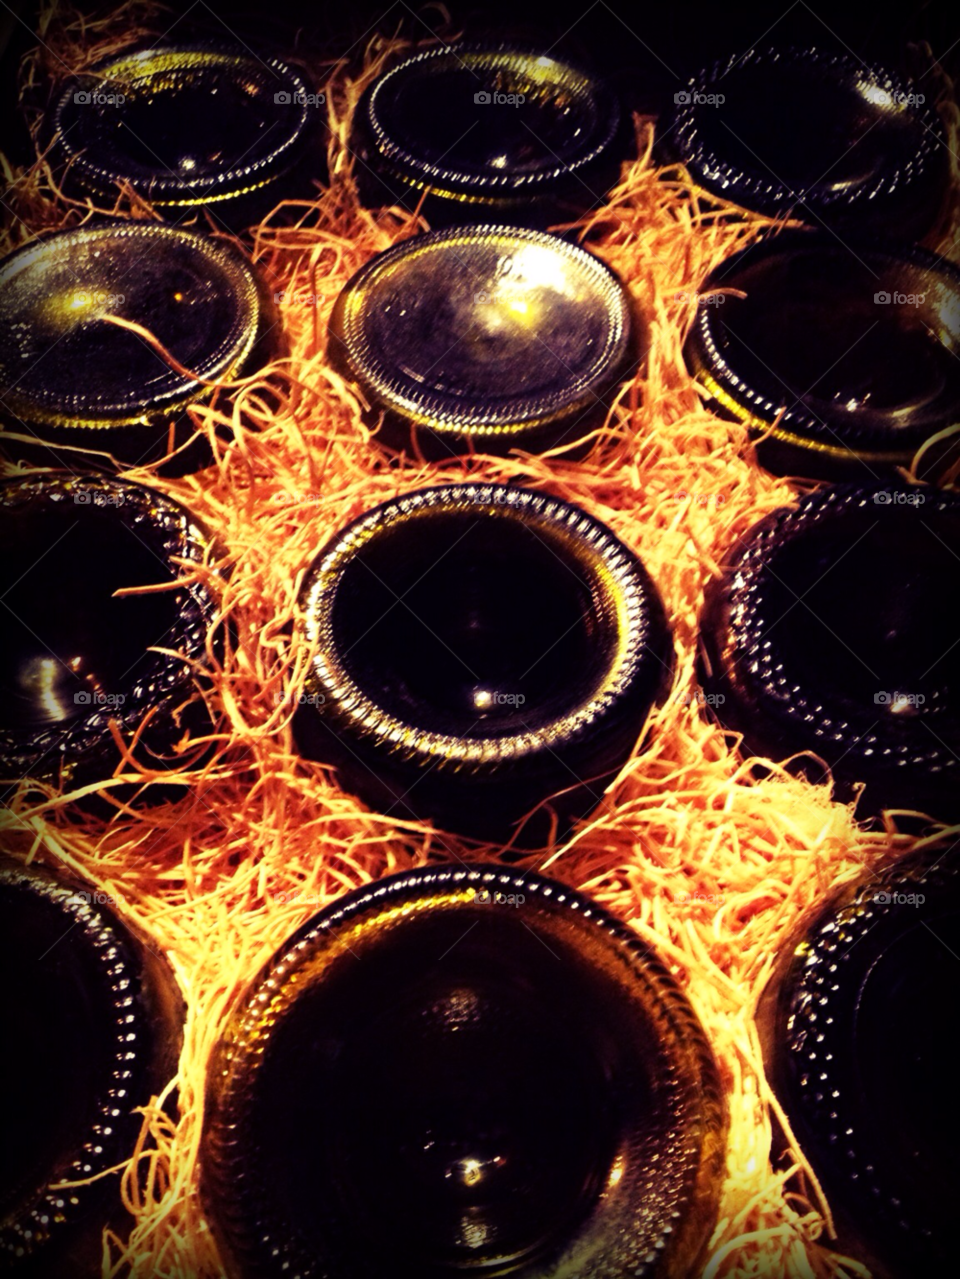 vineyard alcohol wine bottles by bigcarp